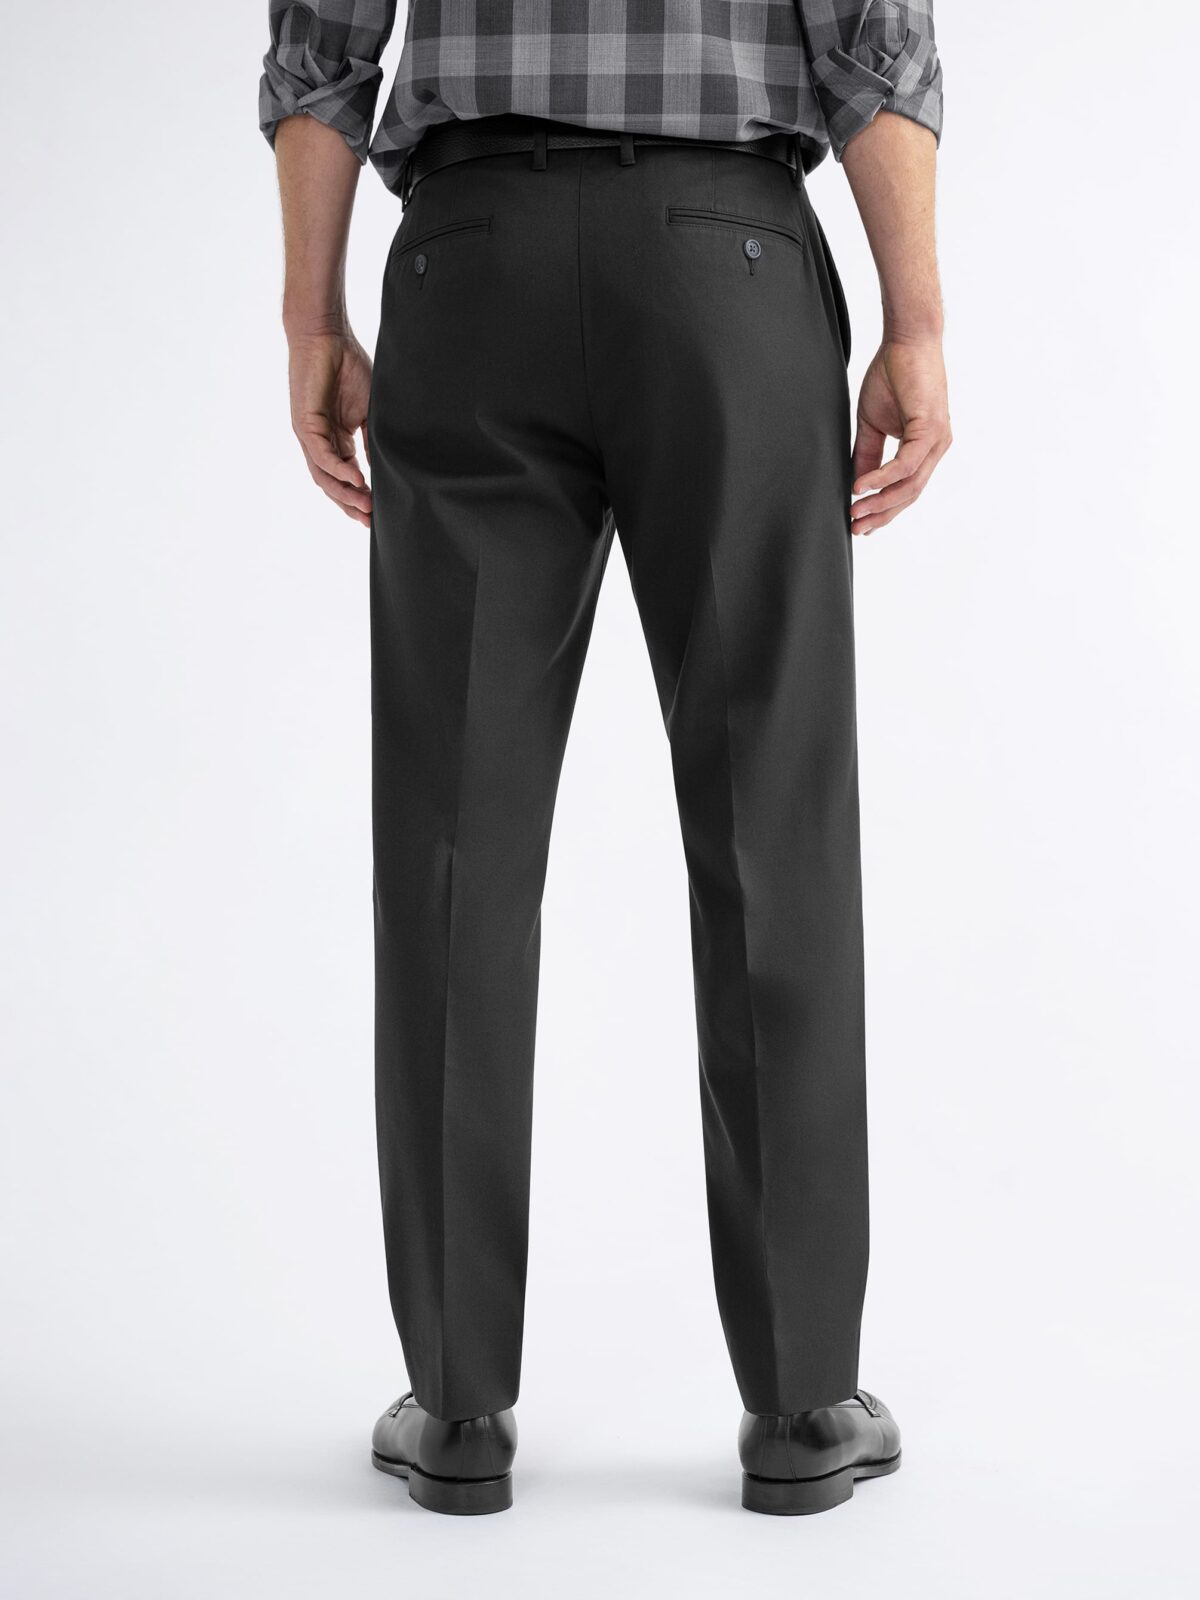 Versa Black Washable Cotton Stretch Pant - Custom Fit Pants